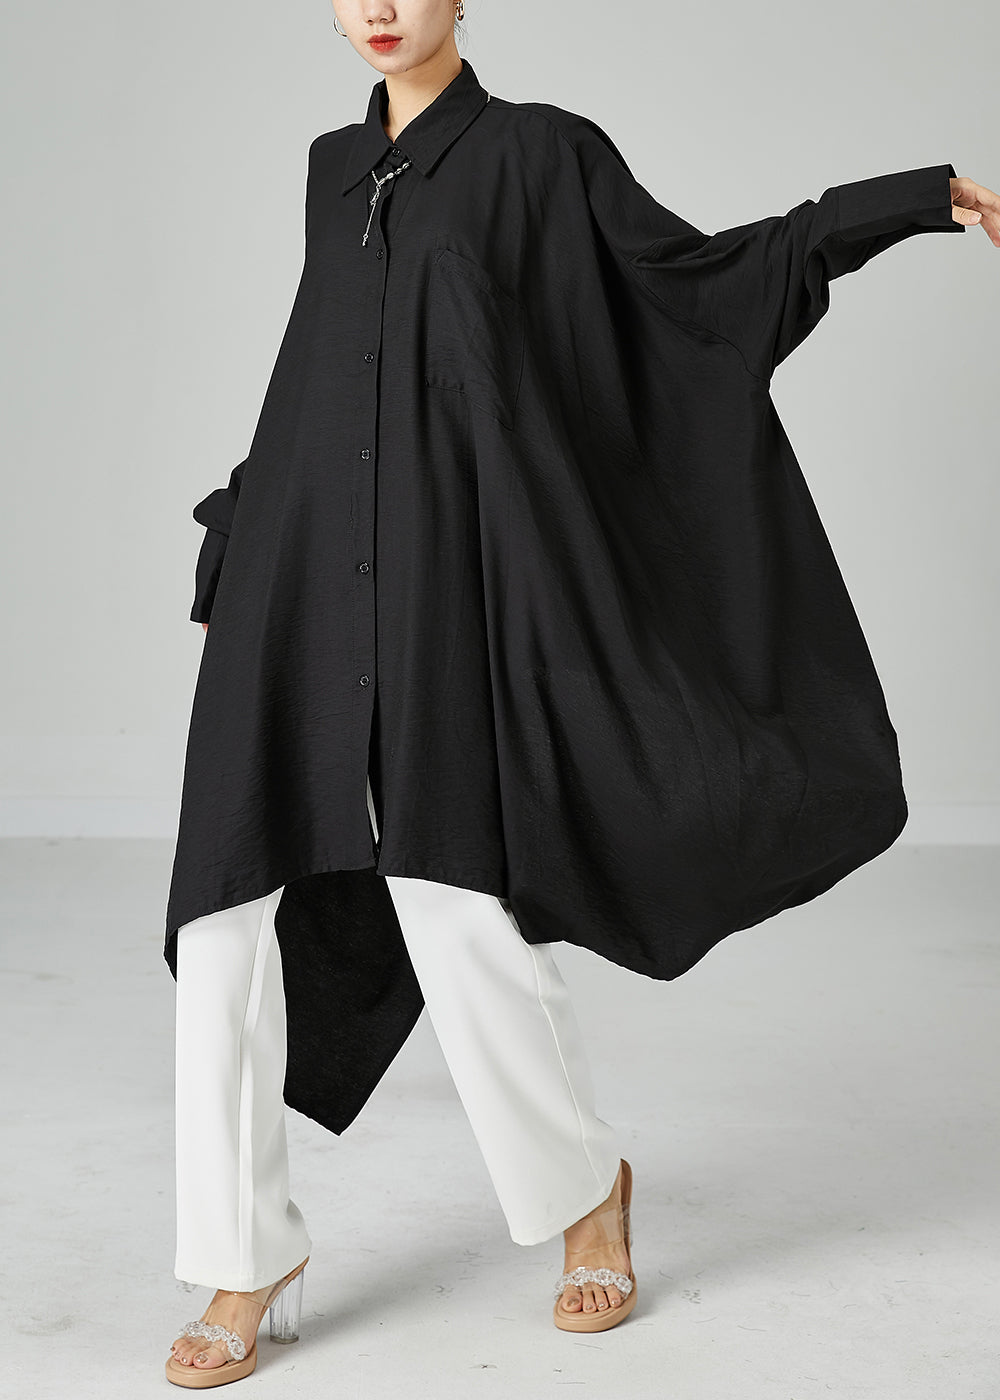 Style Black Asymmetrical Design Oversized Cotton A Line Dresses Summer